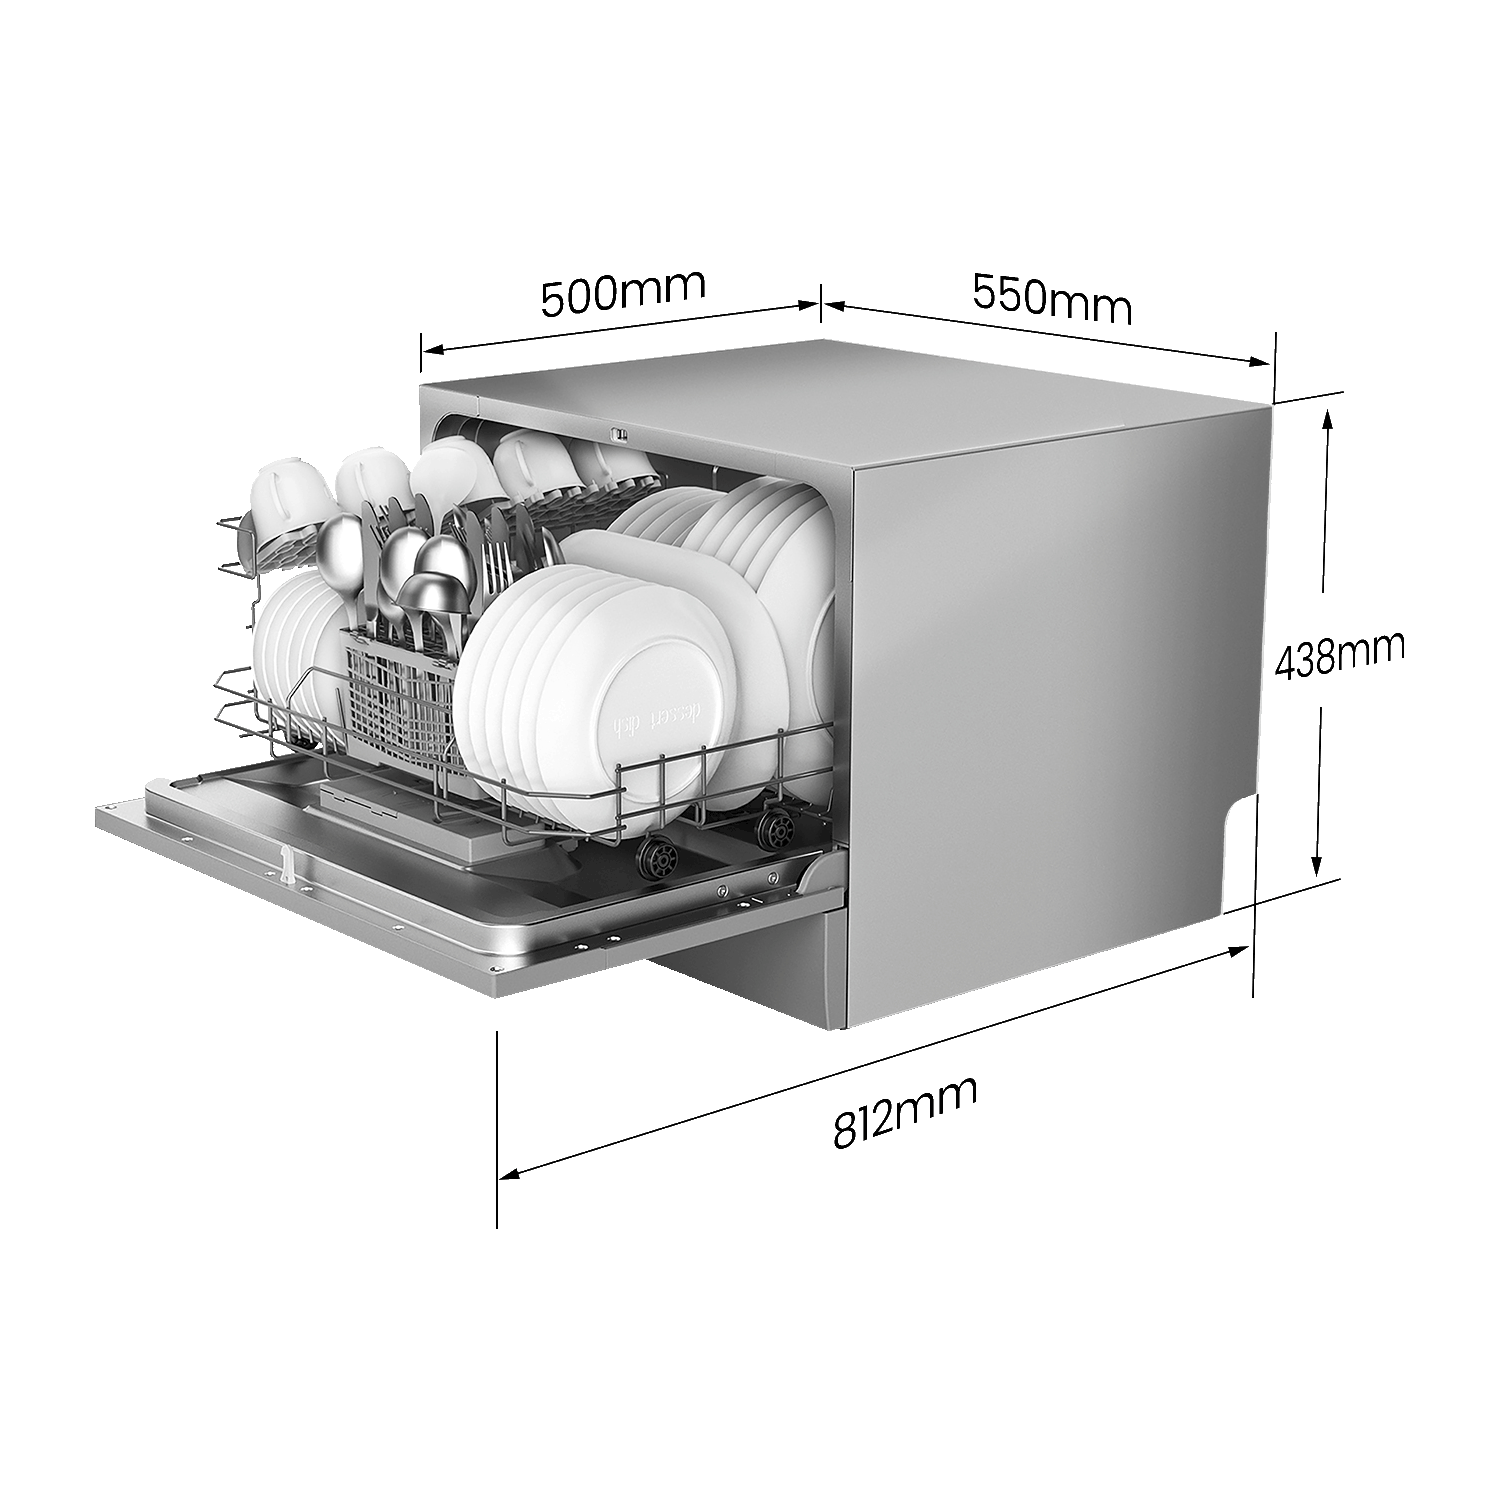 Comfee' Dishwasher – Global